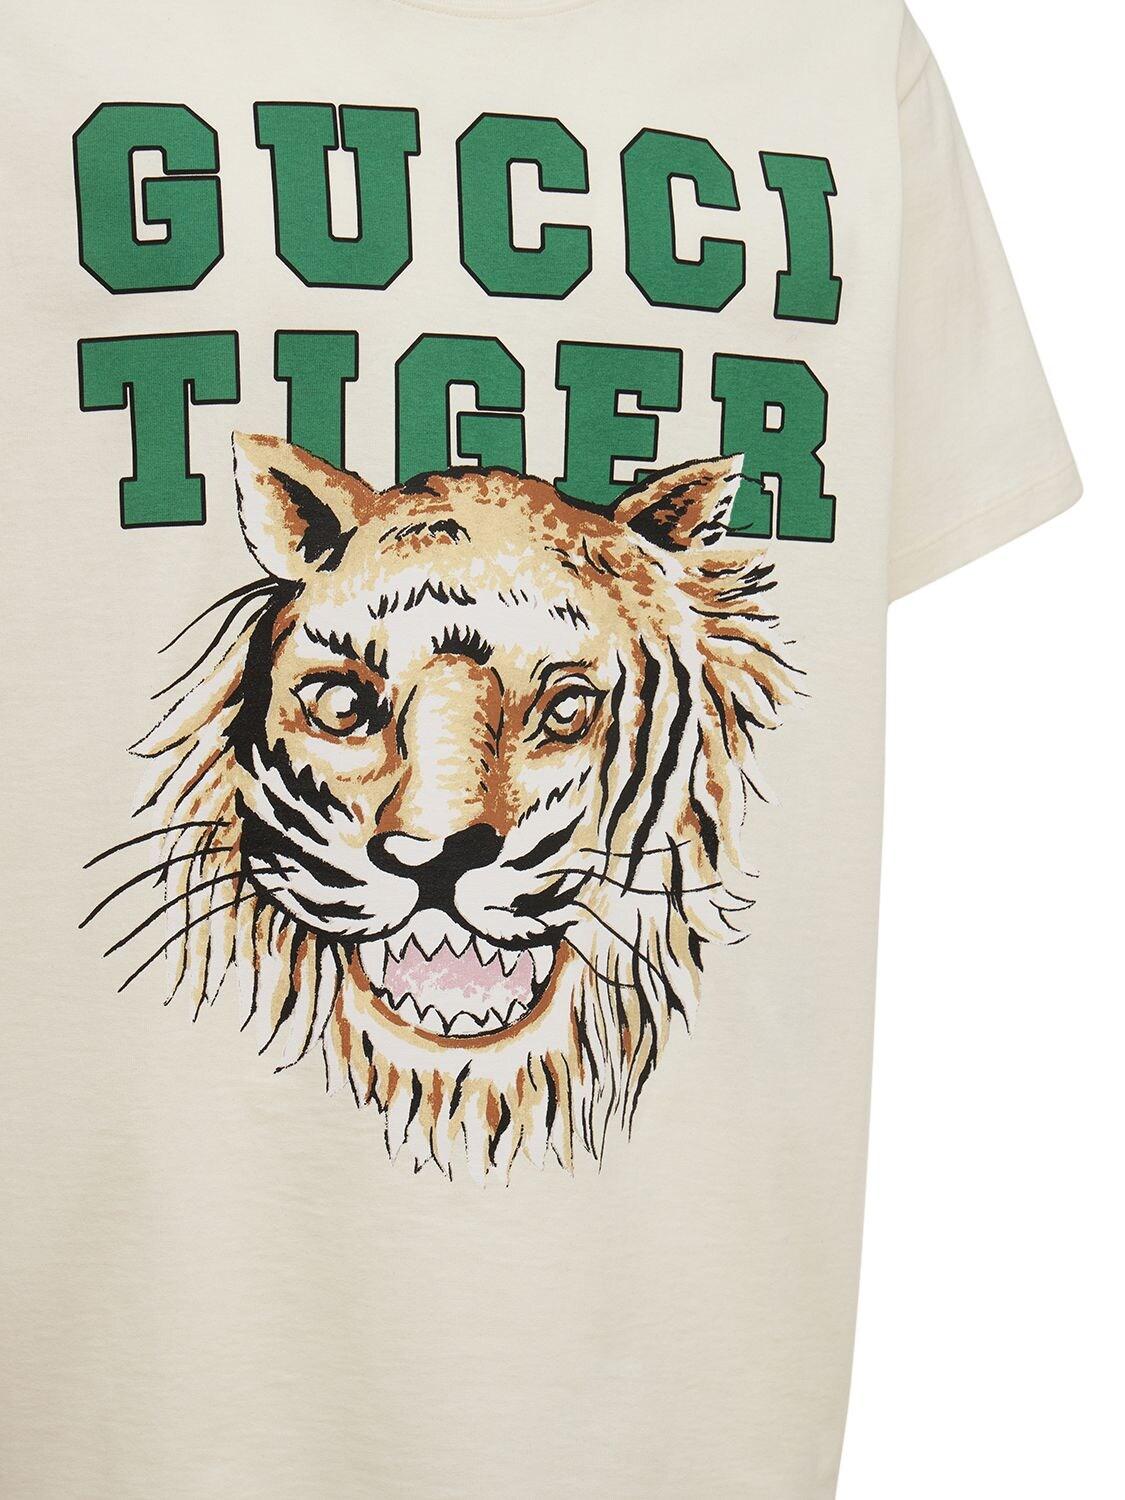 Gucci Original Print Cotton T-Shirt for Men